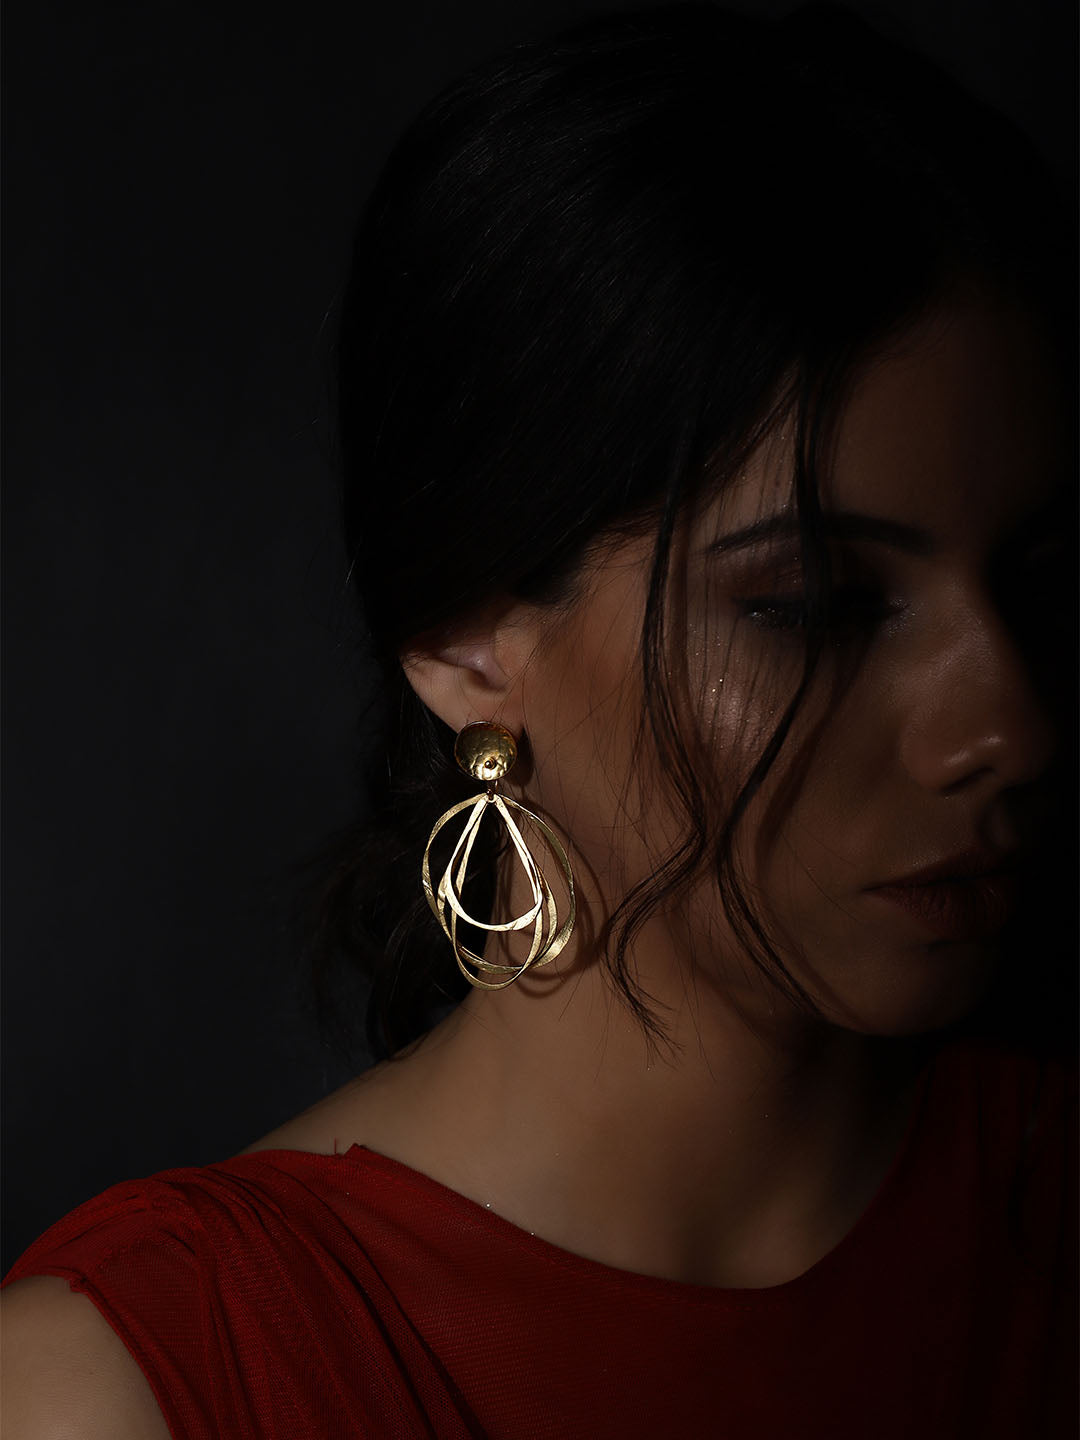 Gold Plated Asymmetric Circular Danglers, Earrings - Shopberserk